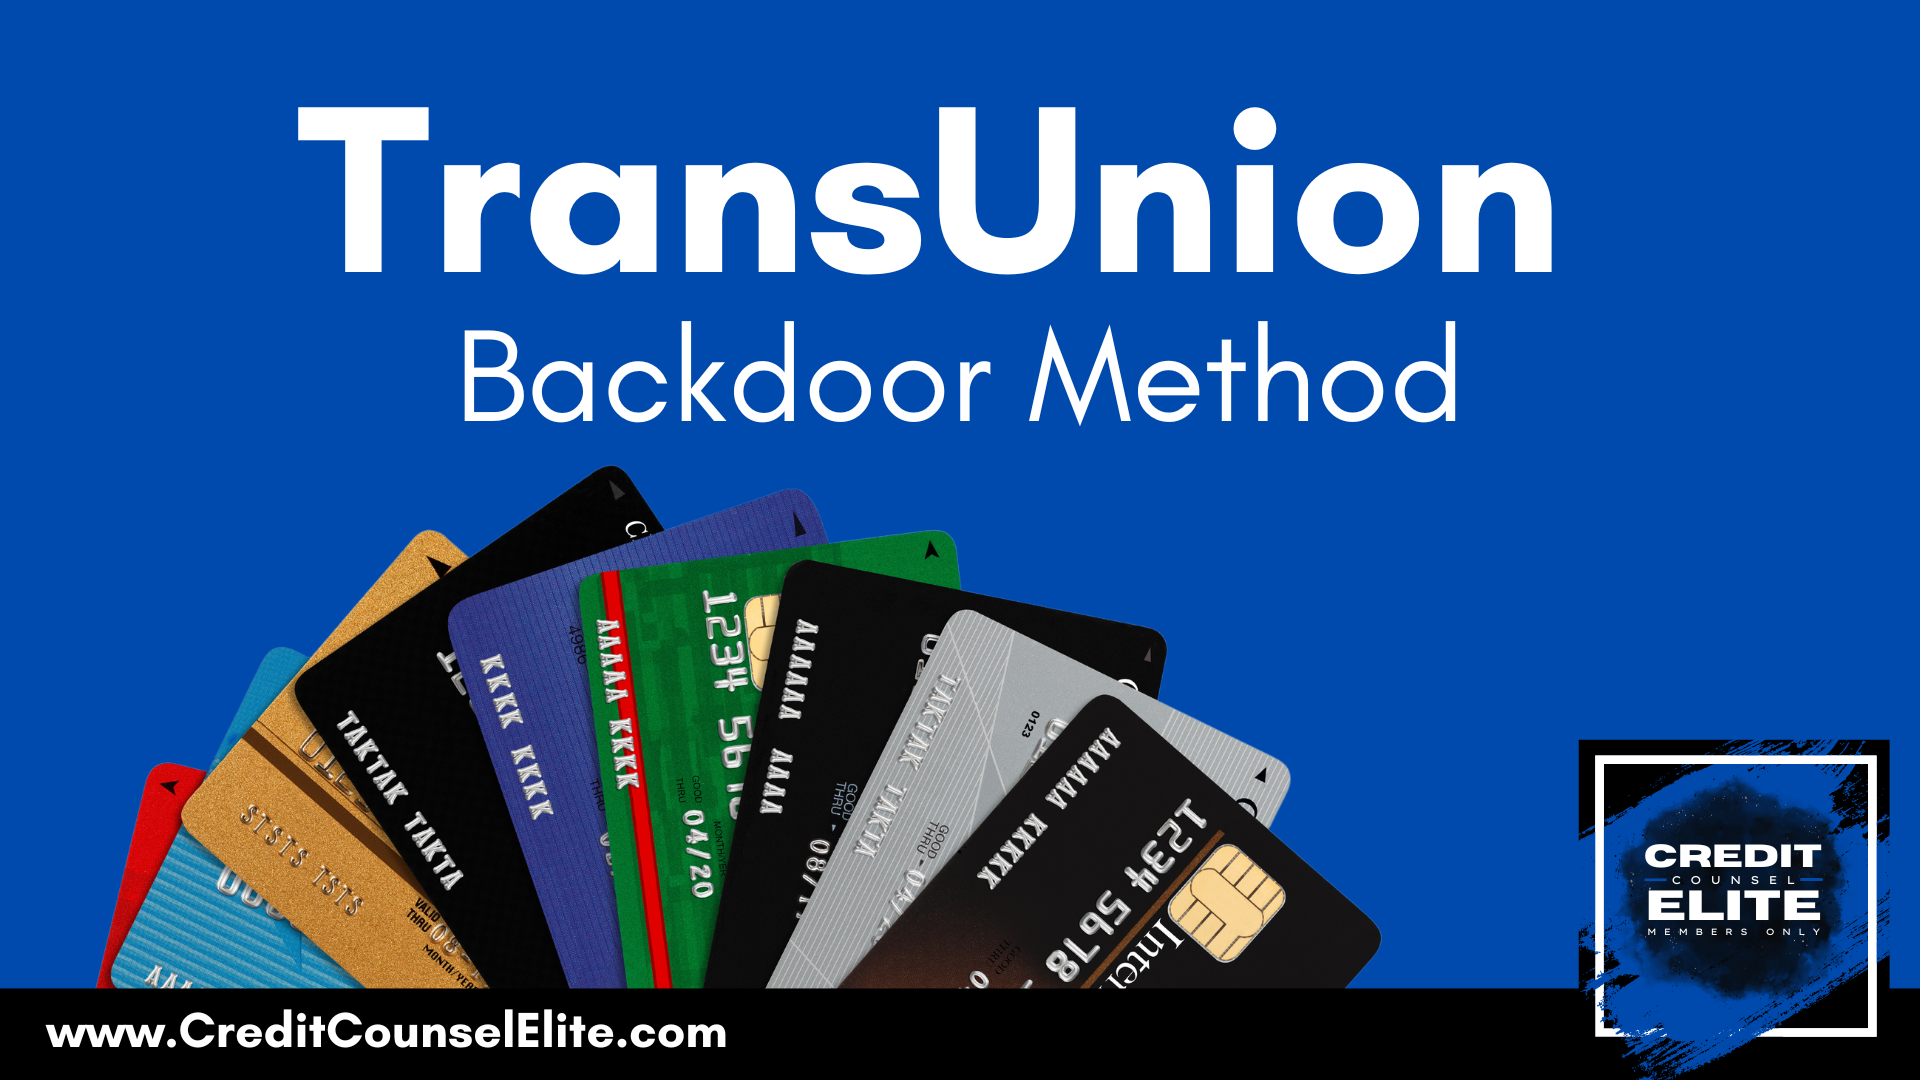 Trans Union Backdoor Method